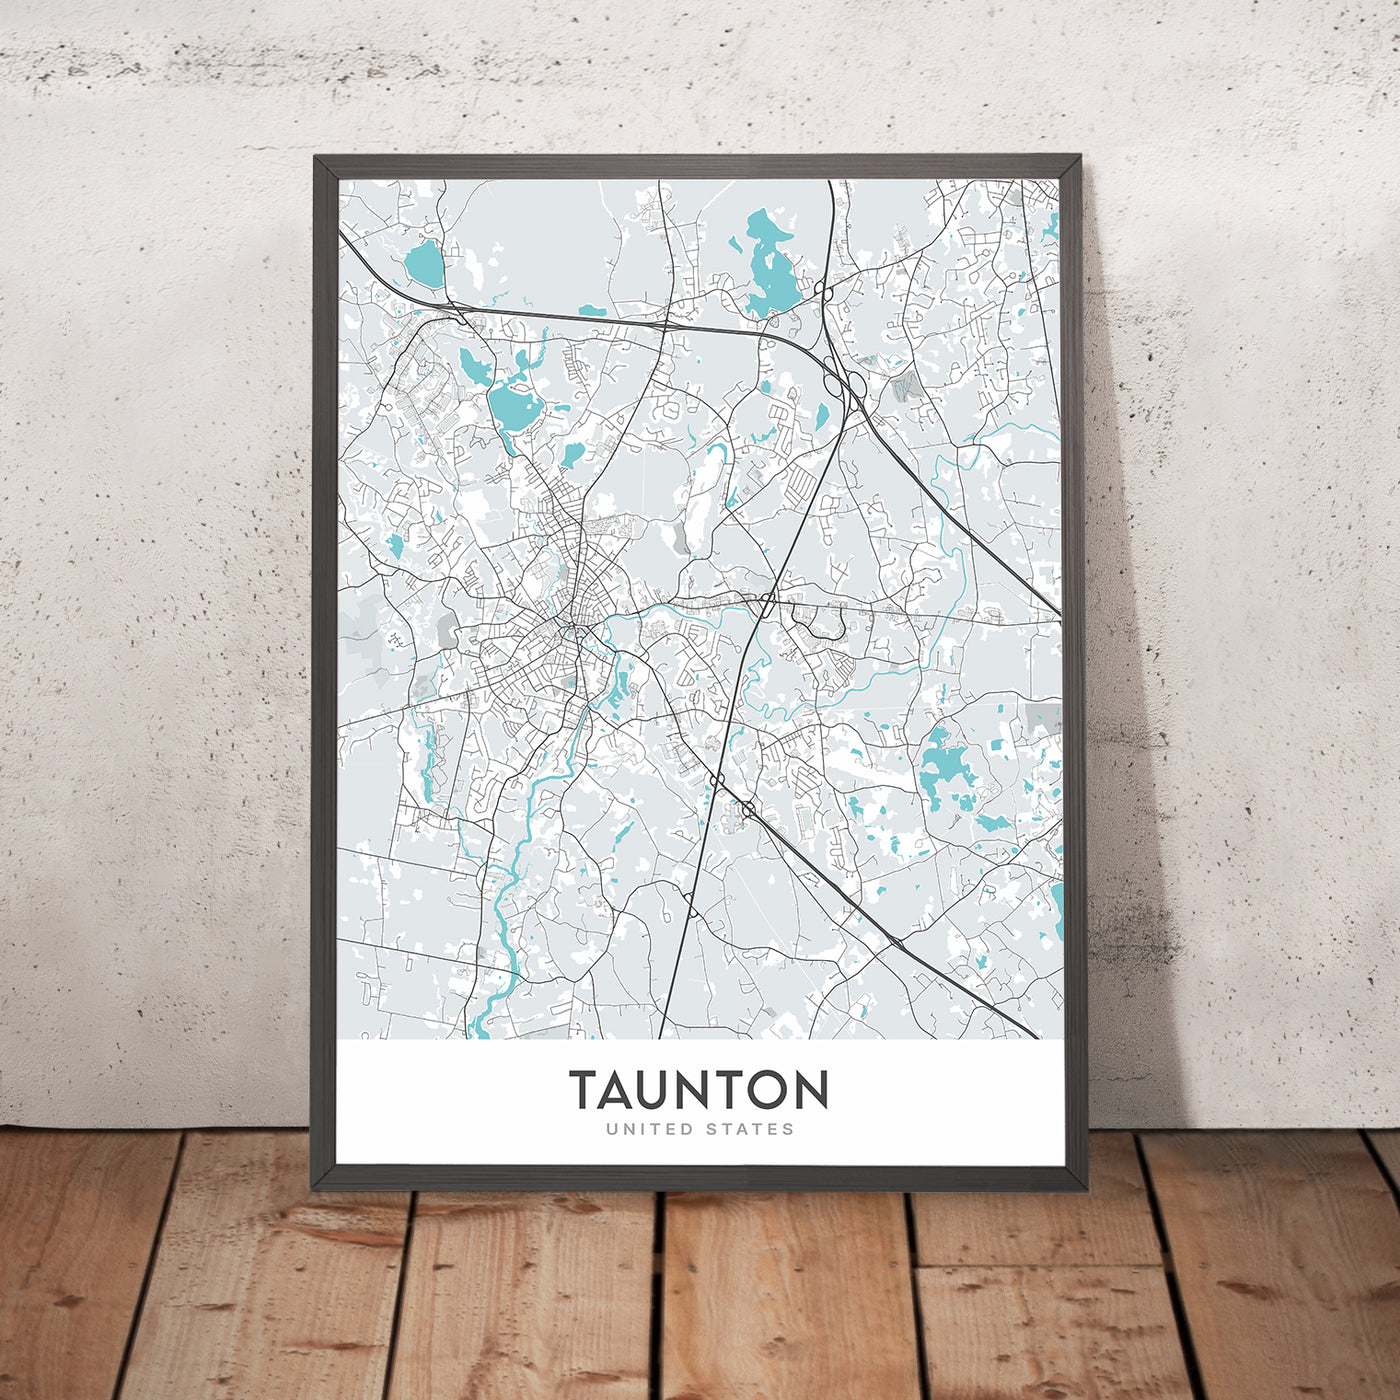 Plan de la ville moderne de Taunton, MA : centre-ville, Old Colony Historical Society, Taunton Green, bibliothèque publique de Taunton, Whittenton